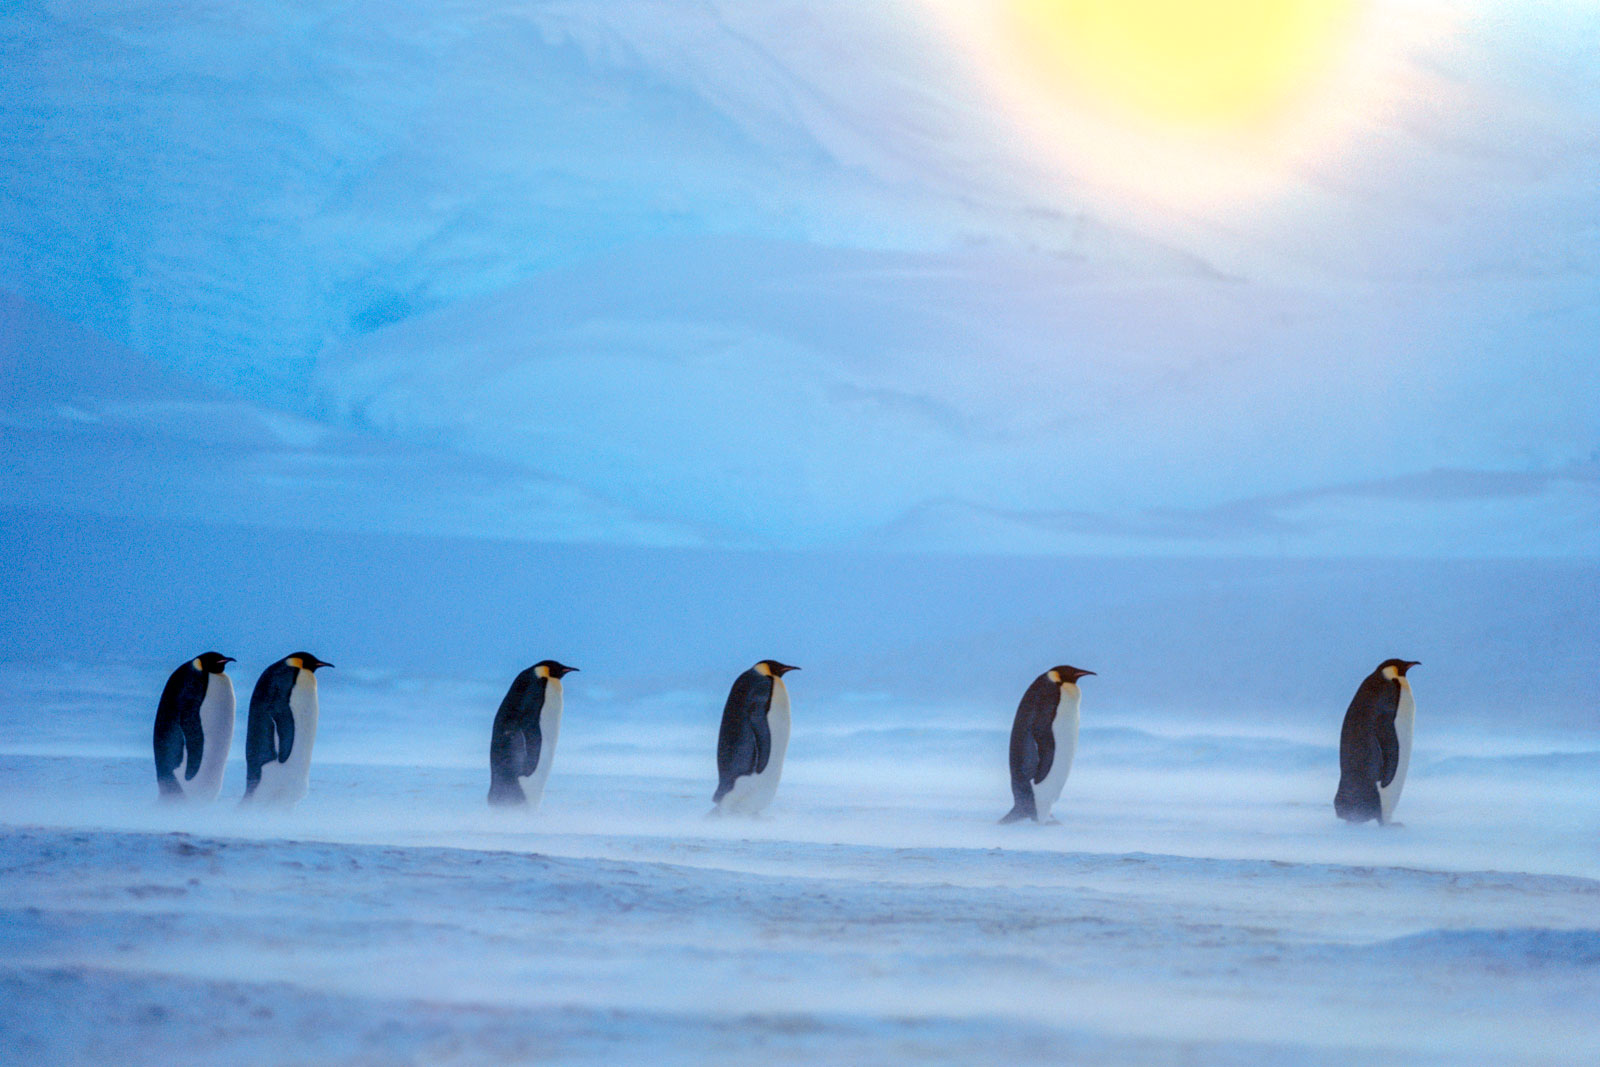 Emperor penguins in blizzard, Weddell sea, Antarctica